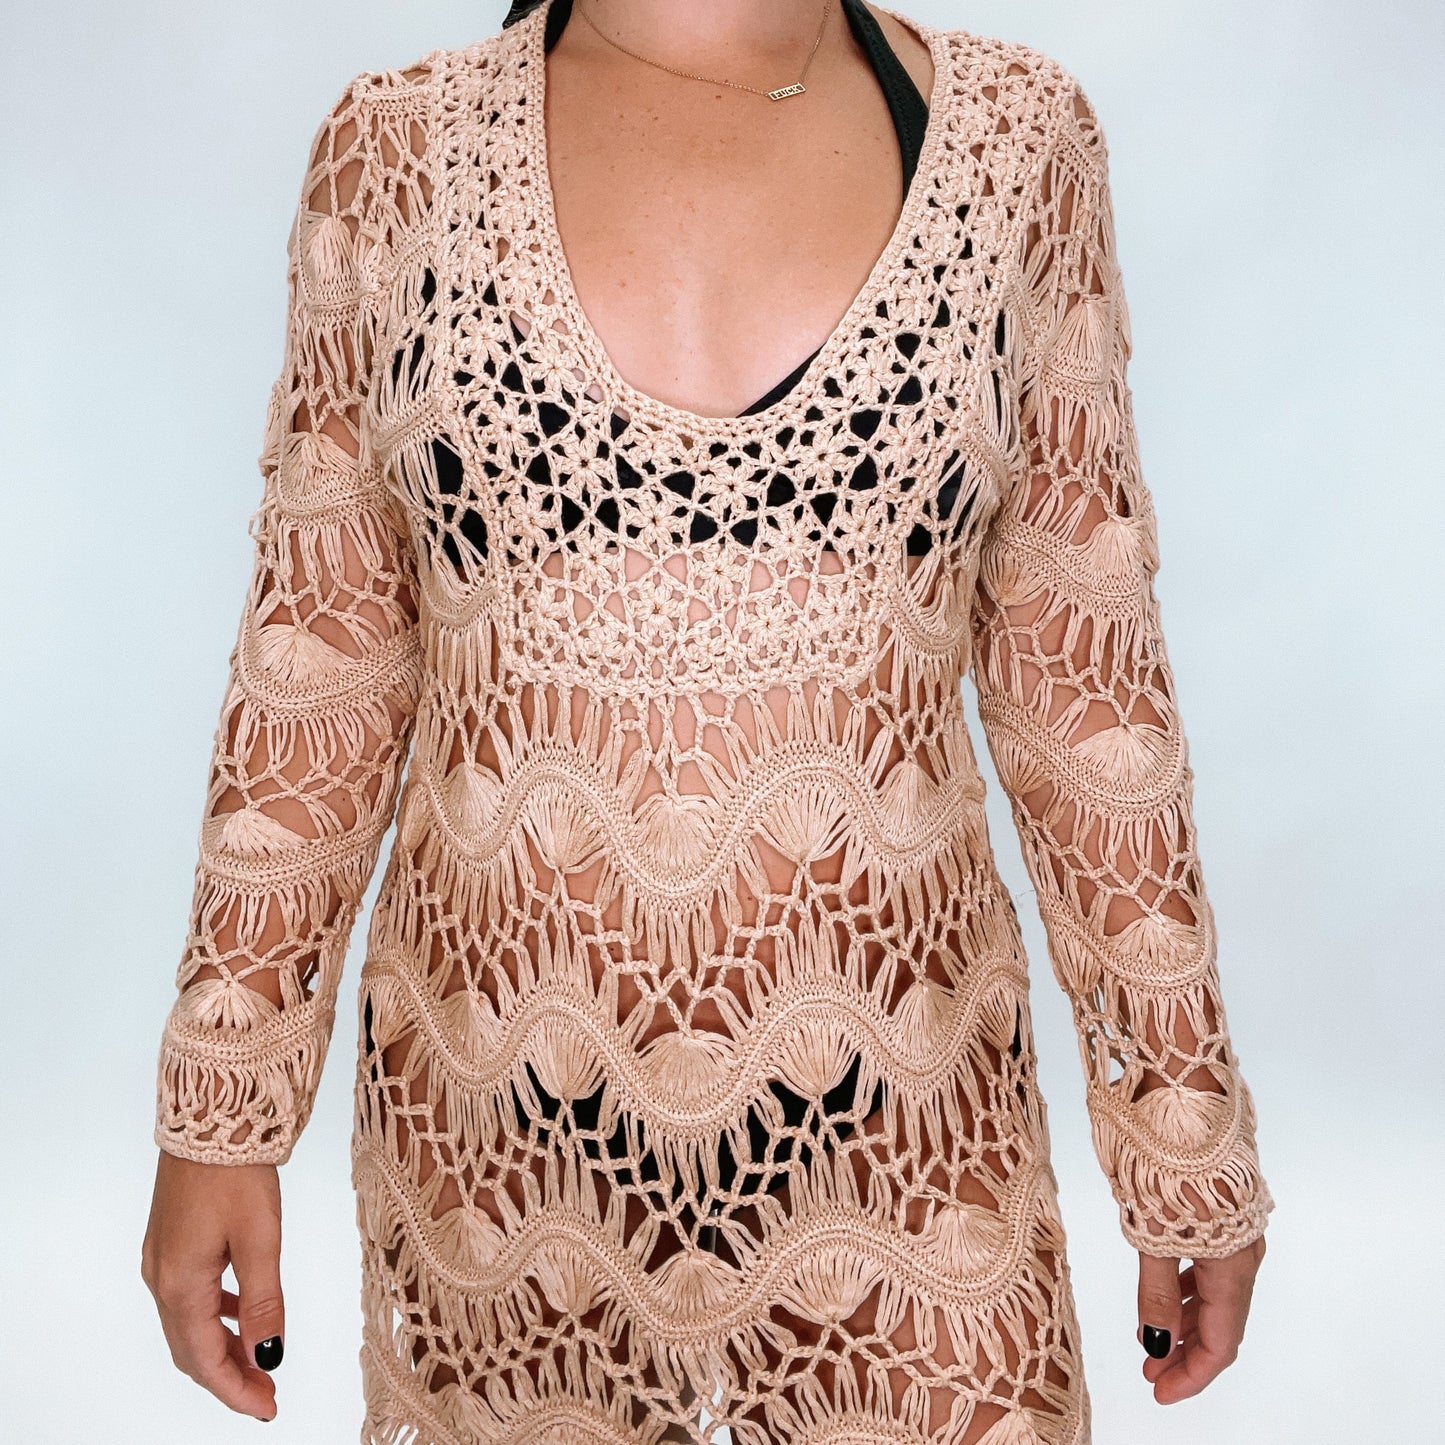 The Laguna Crochet Dress